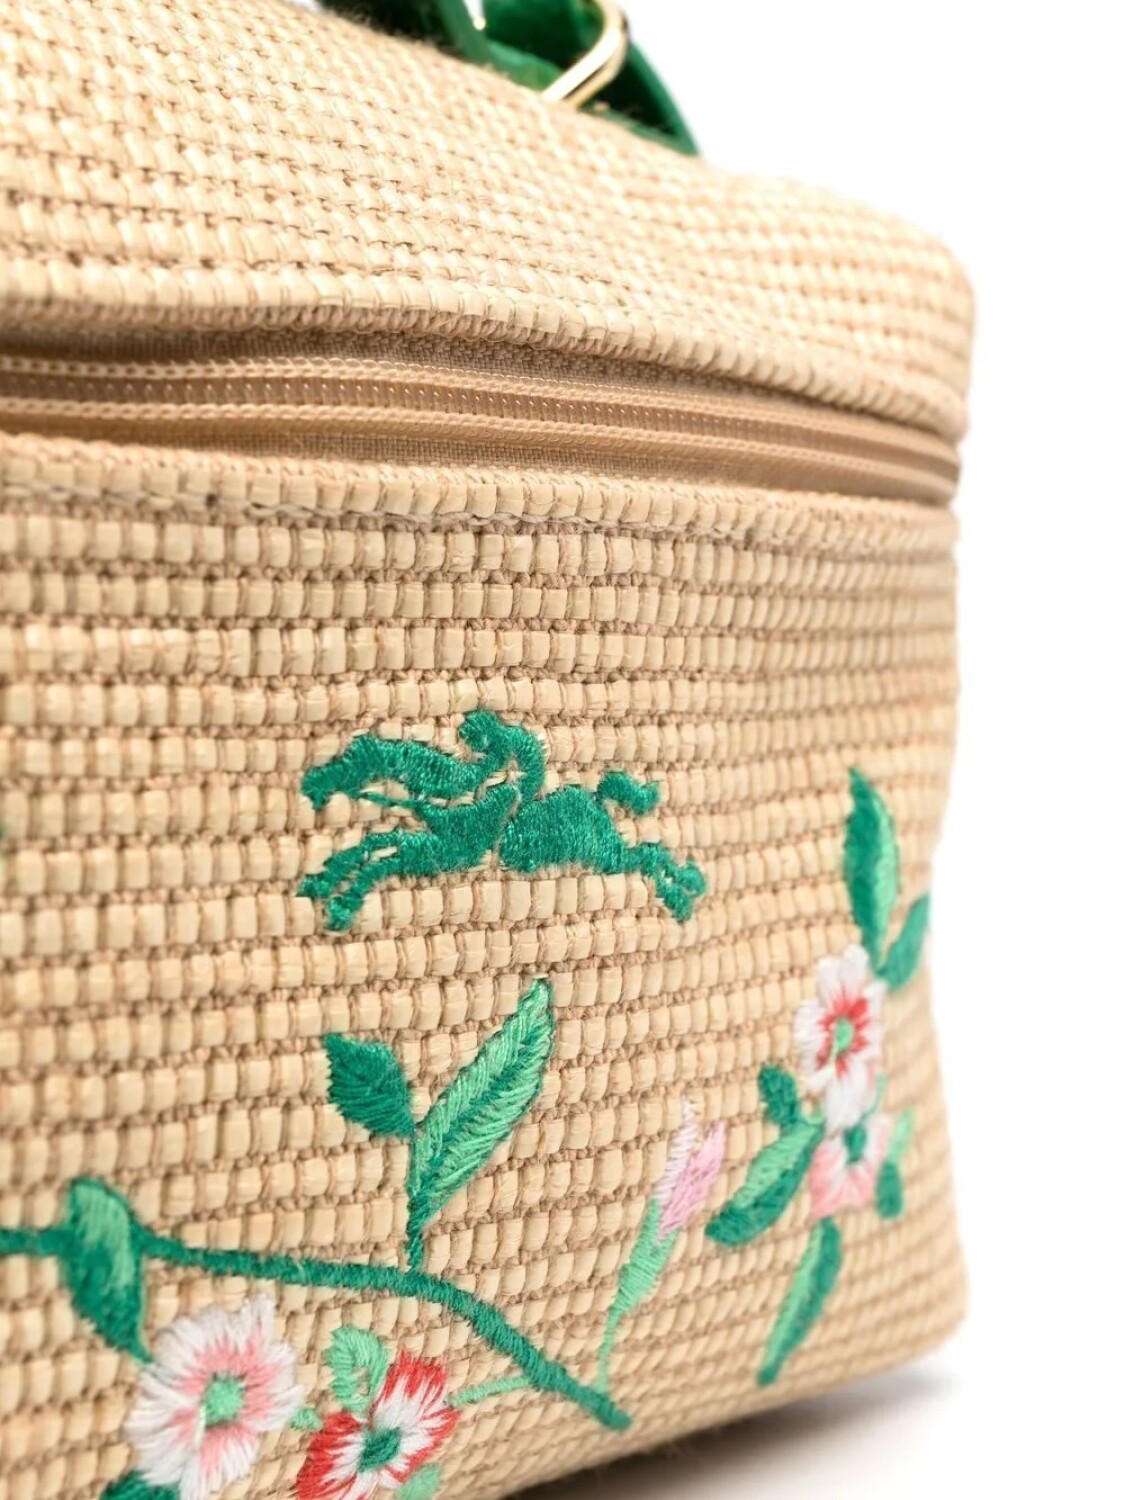 Longchamp -Mini cesta bordada, Le panier pliage Verde